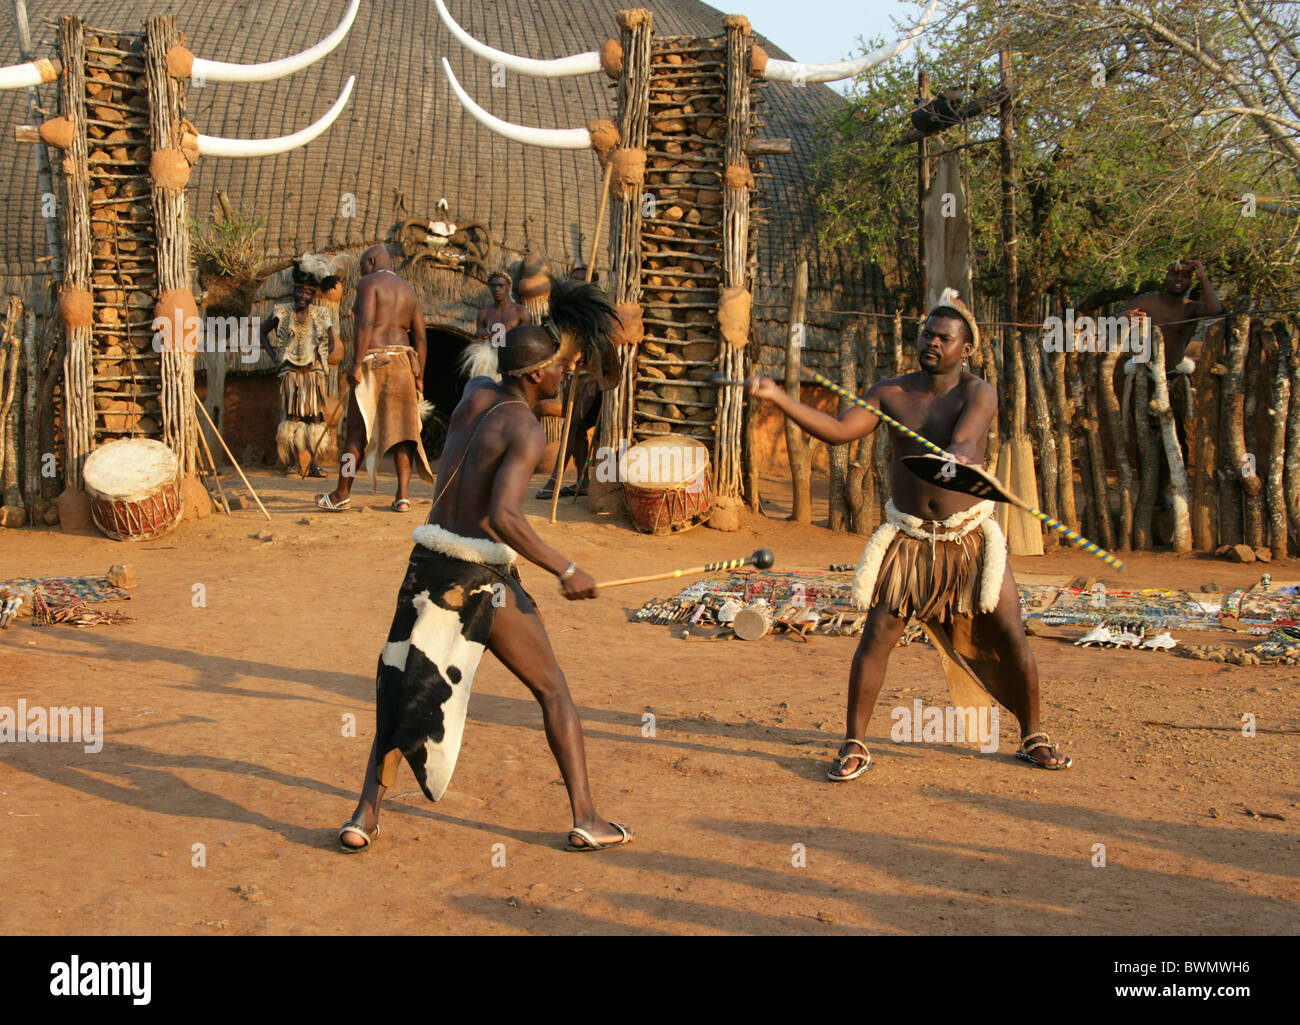 Photograph, South Africa, Zulu Stick Fighting, 187